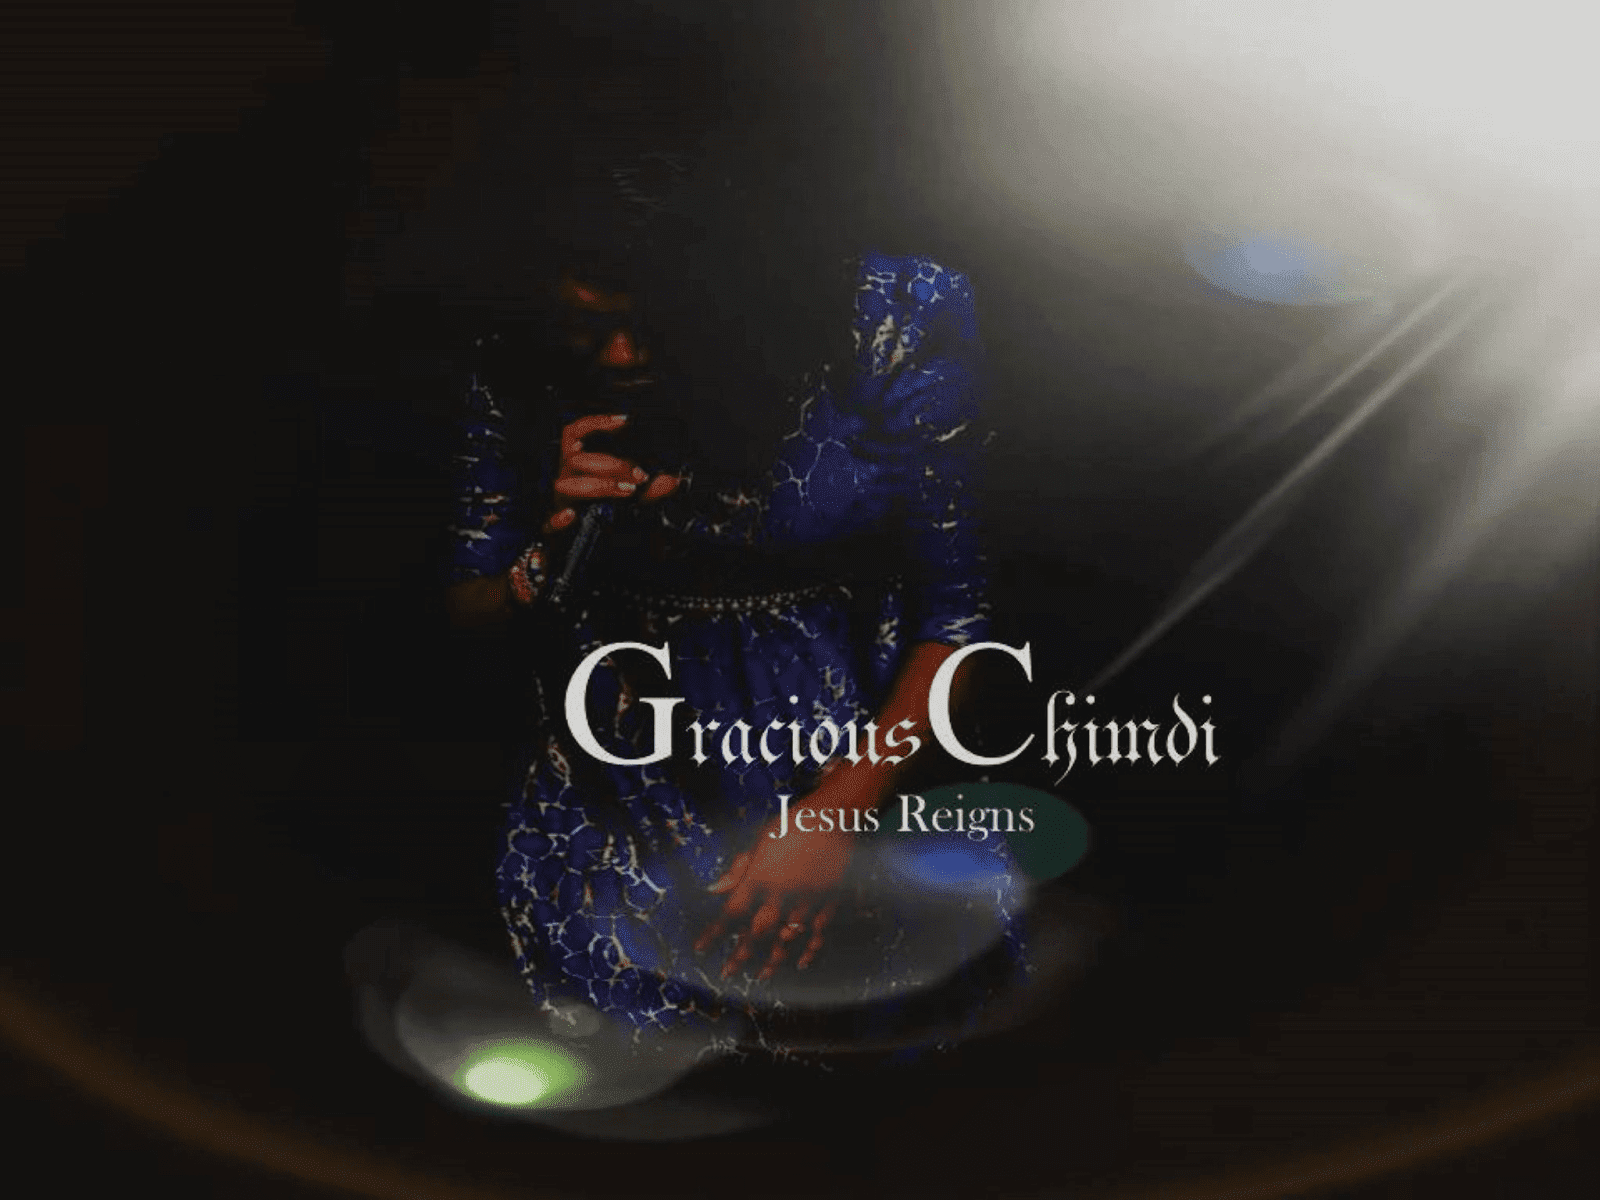 Gracious Chimdi Jesus Reigns Lyrics Mp3 Download Gm Lyrics